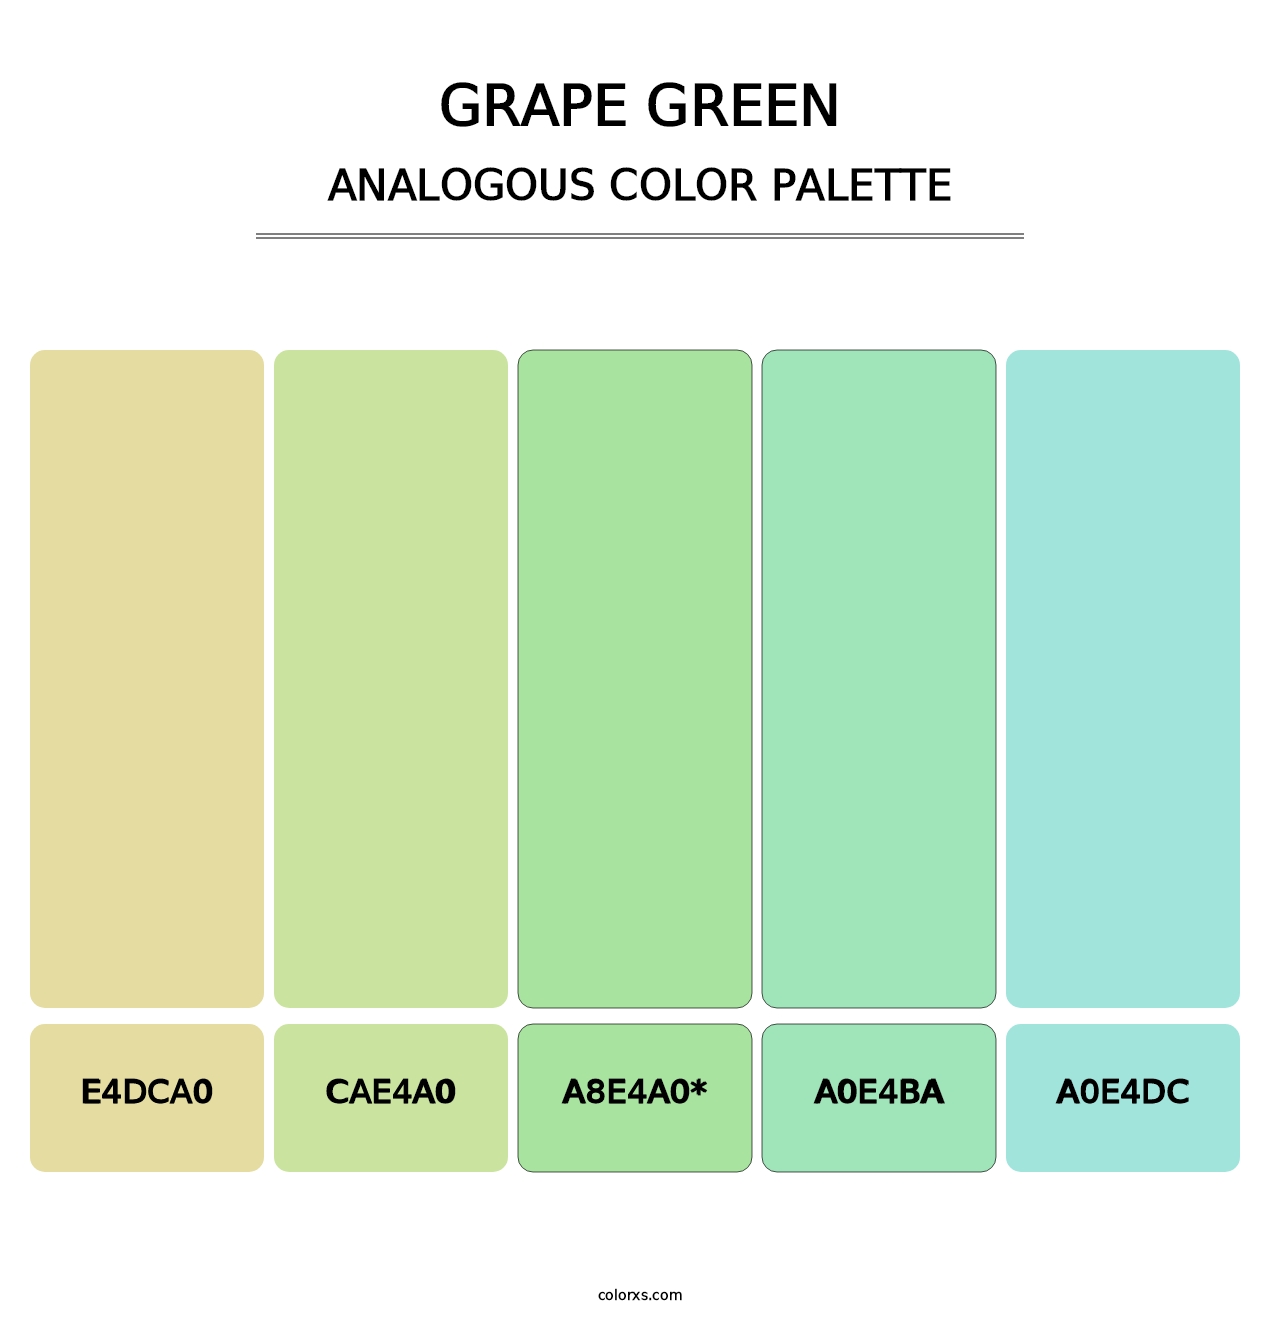 Grape Green - Analogous Color Palette